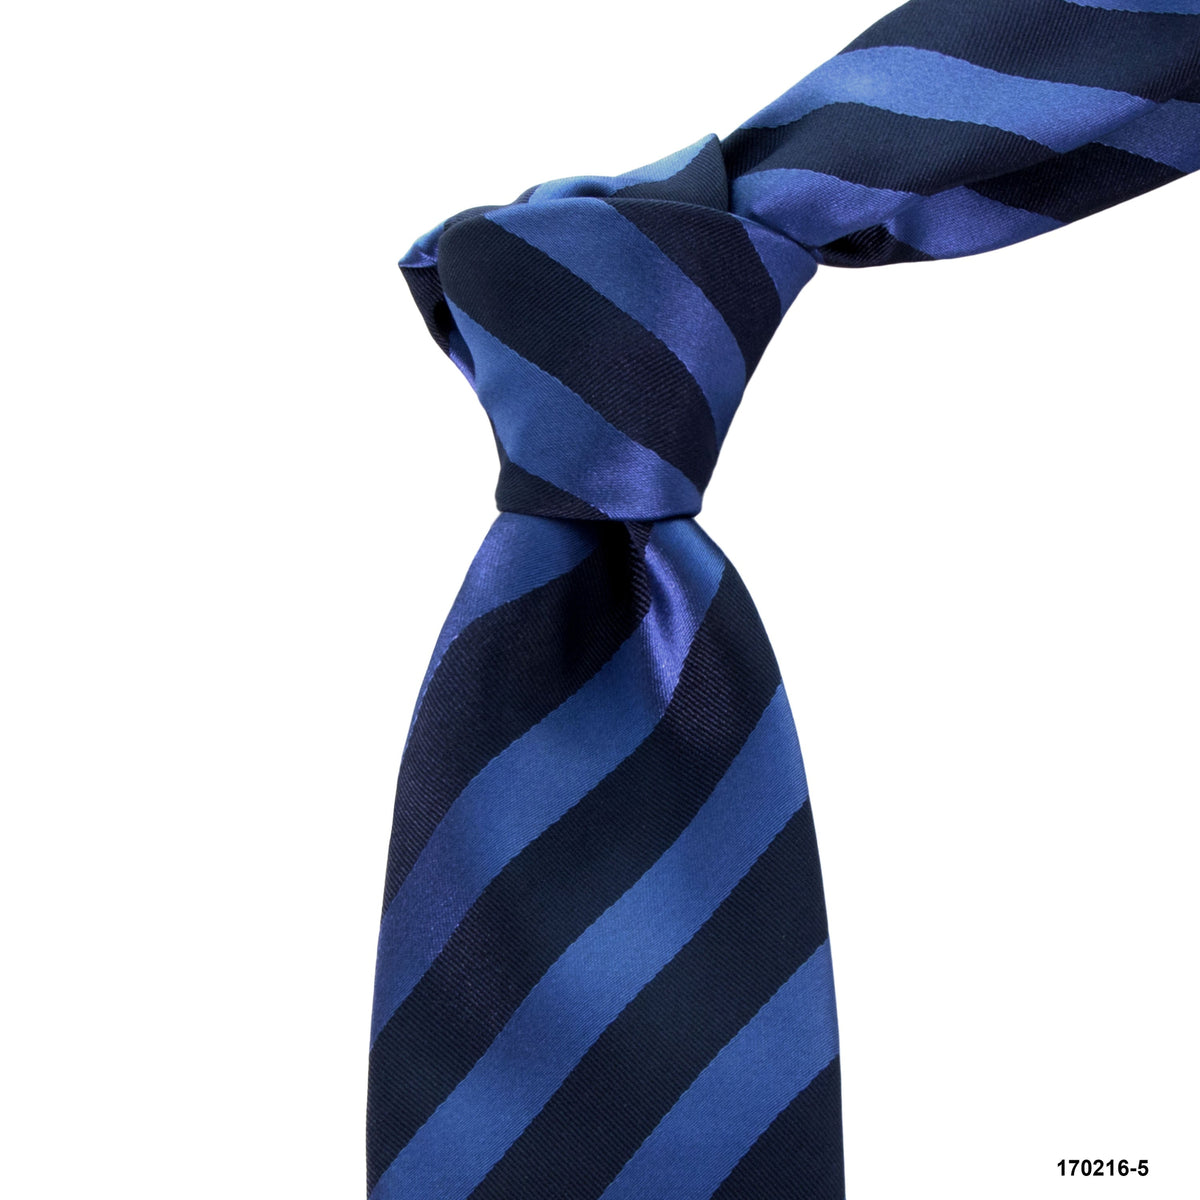 MarZthomson 8cm Stripe Tie in Blue and Navy Blue J-Cufflinks.com.sg | Neckties.com.sg